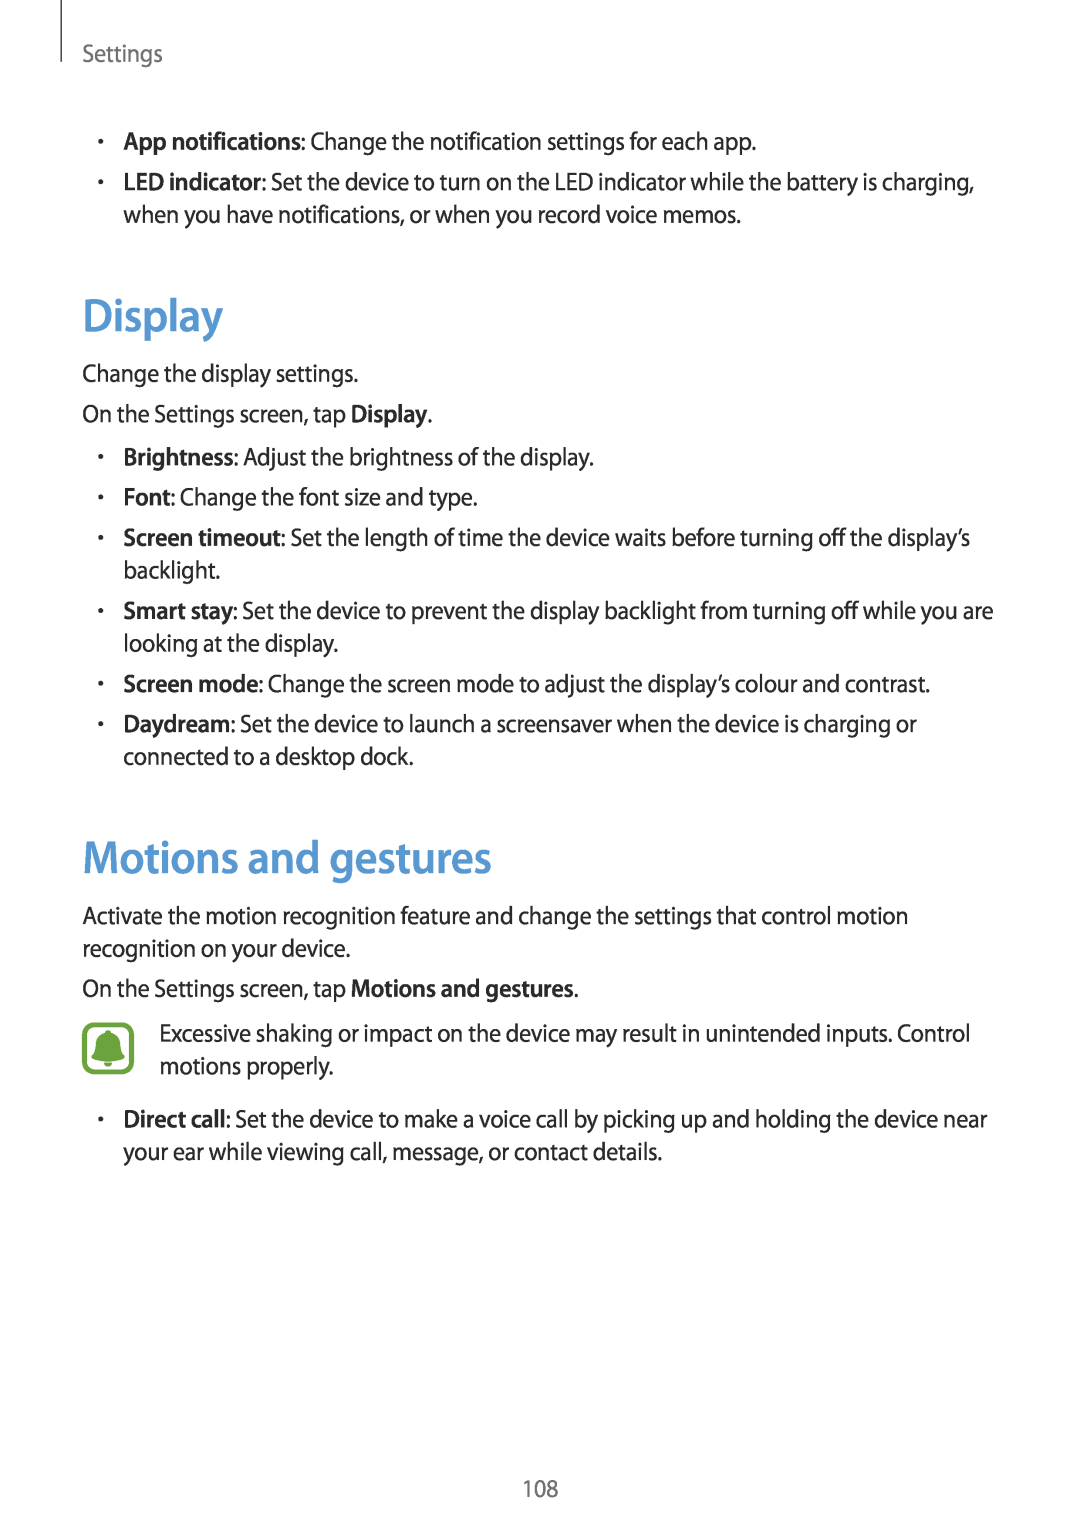 Samsung SM-G920FZBEETL, SM-G920FZKFDBT, SM-G920FZKEDBT, SM-G920FZDEDBT manual Display, Motions and gestures, Settings 